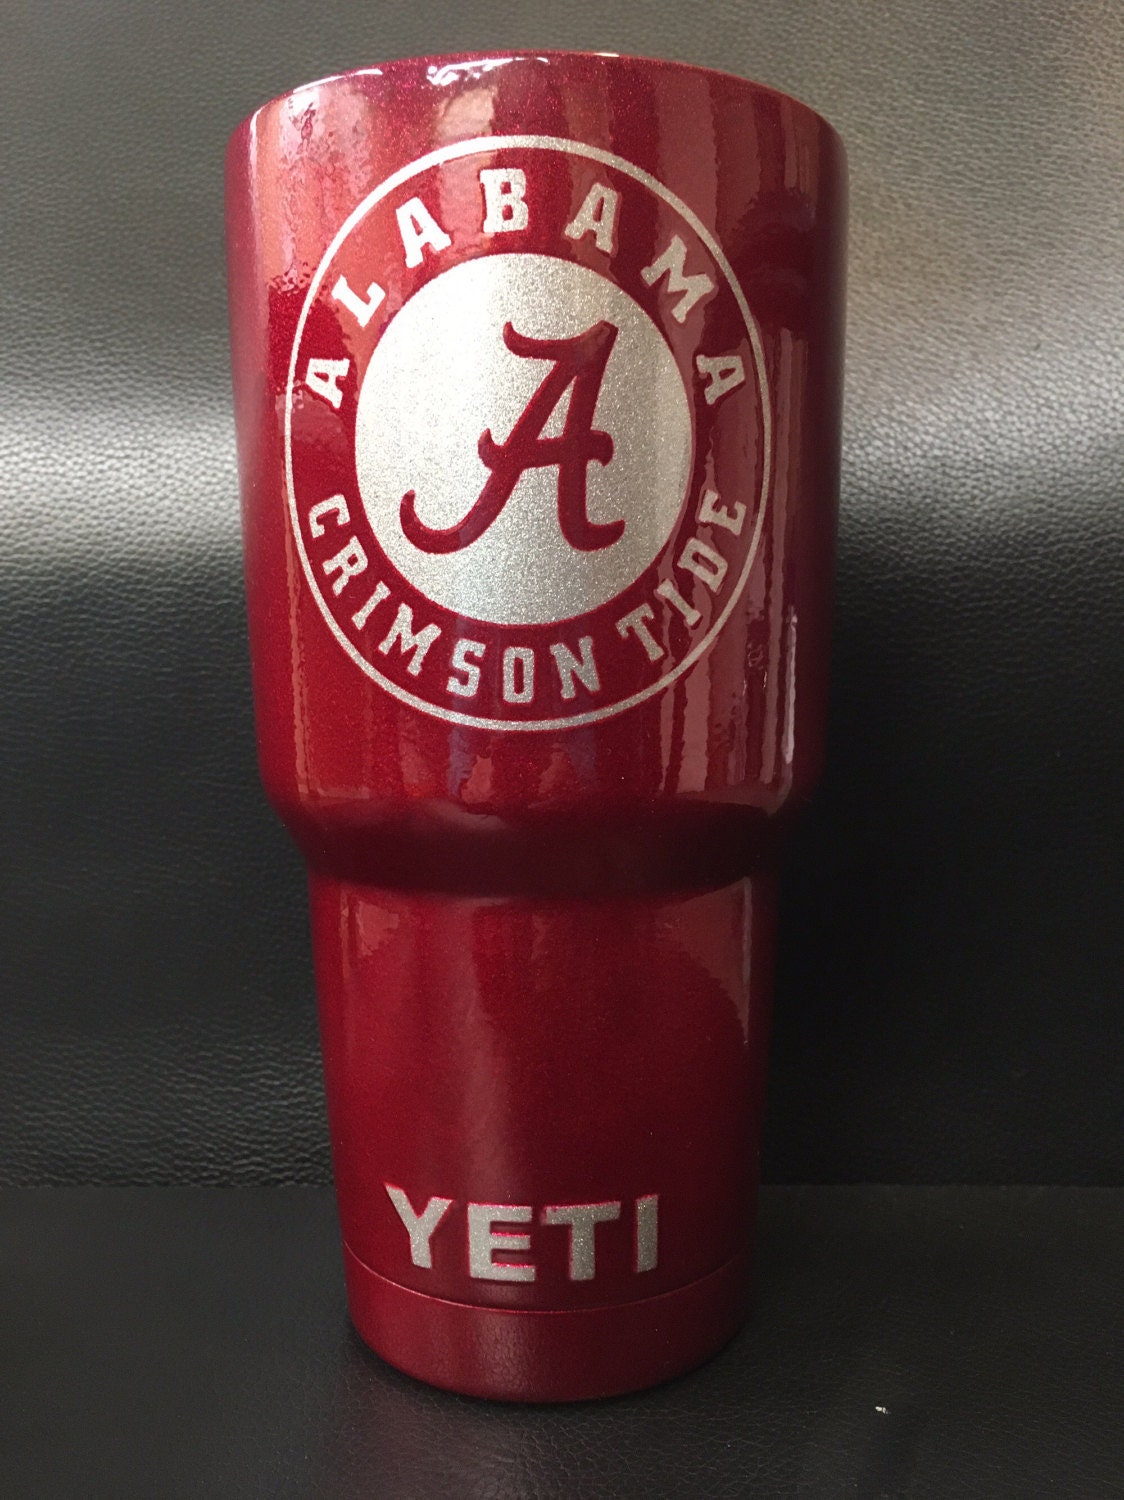 Alabama Yeti Cup 